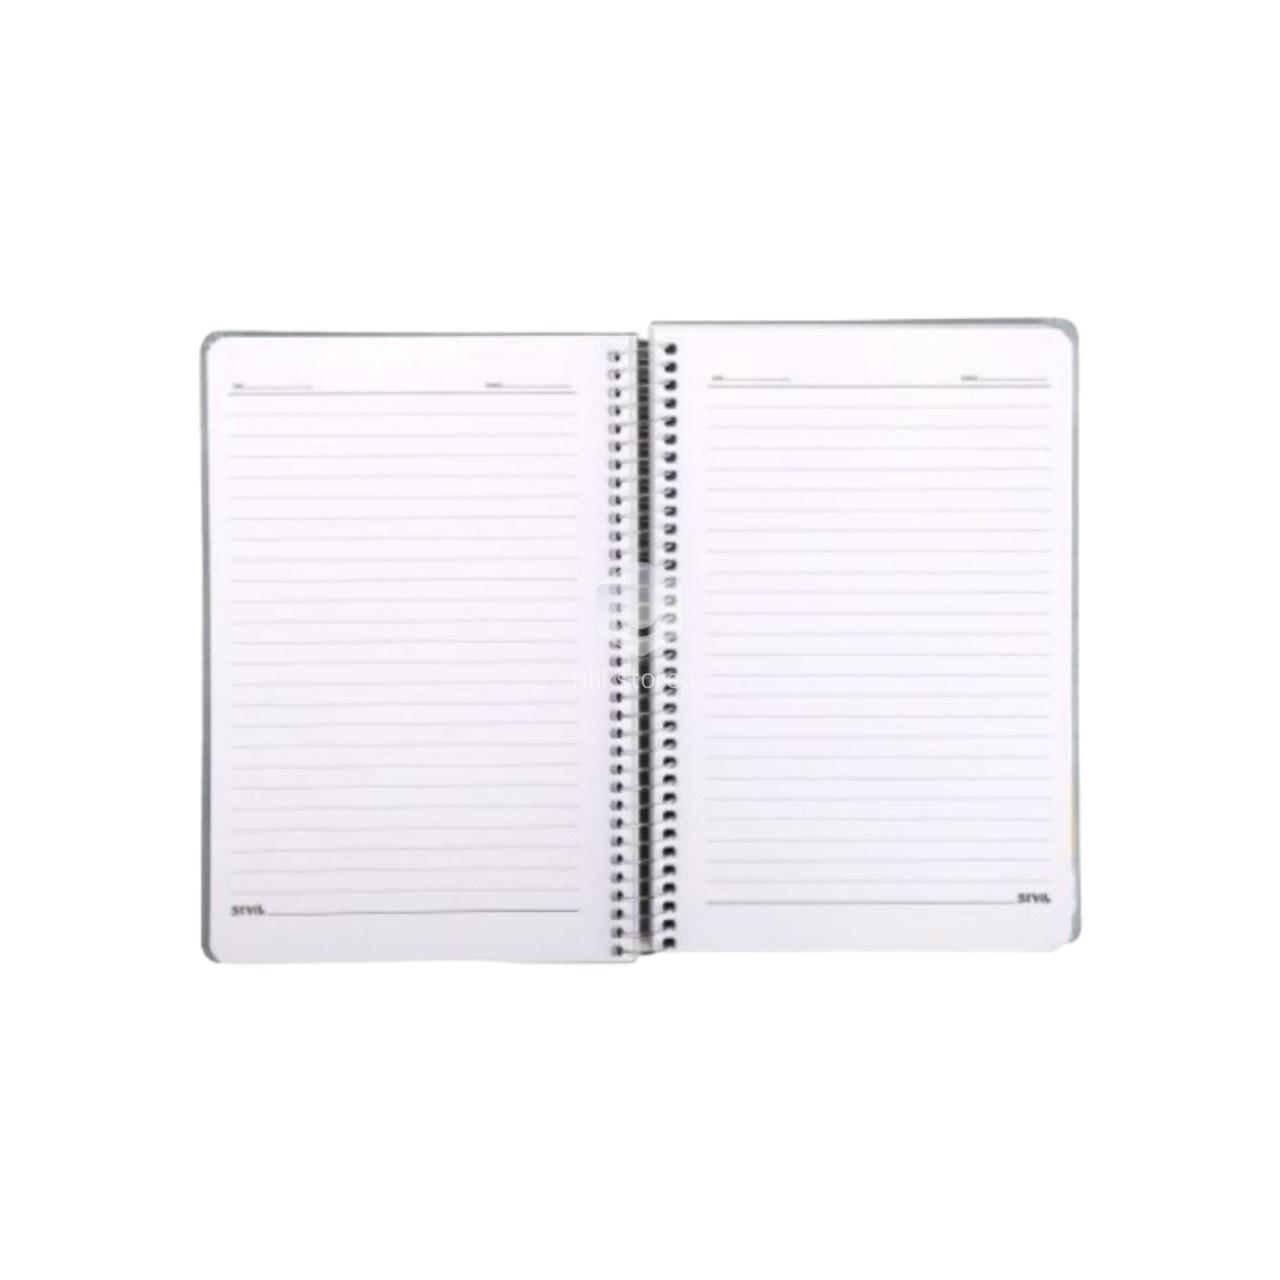 دفتر یادداشت 1/8 کاغذ سفید سویل سری مینیمال کد 211/2 محصول